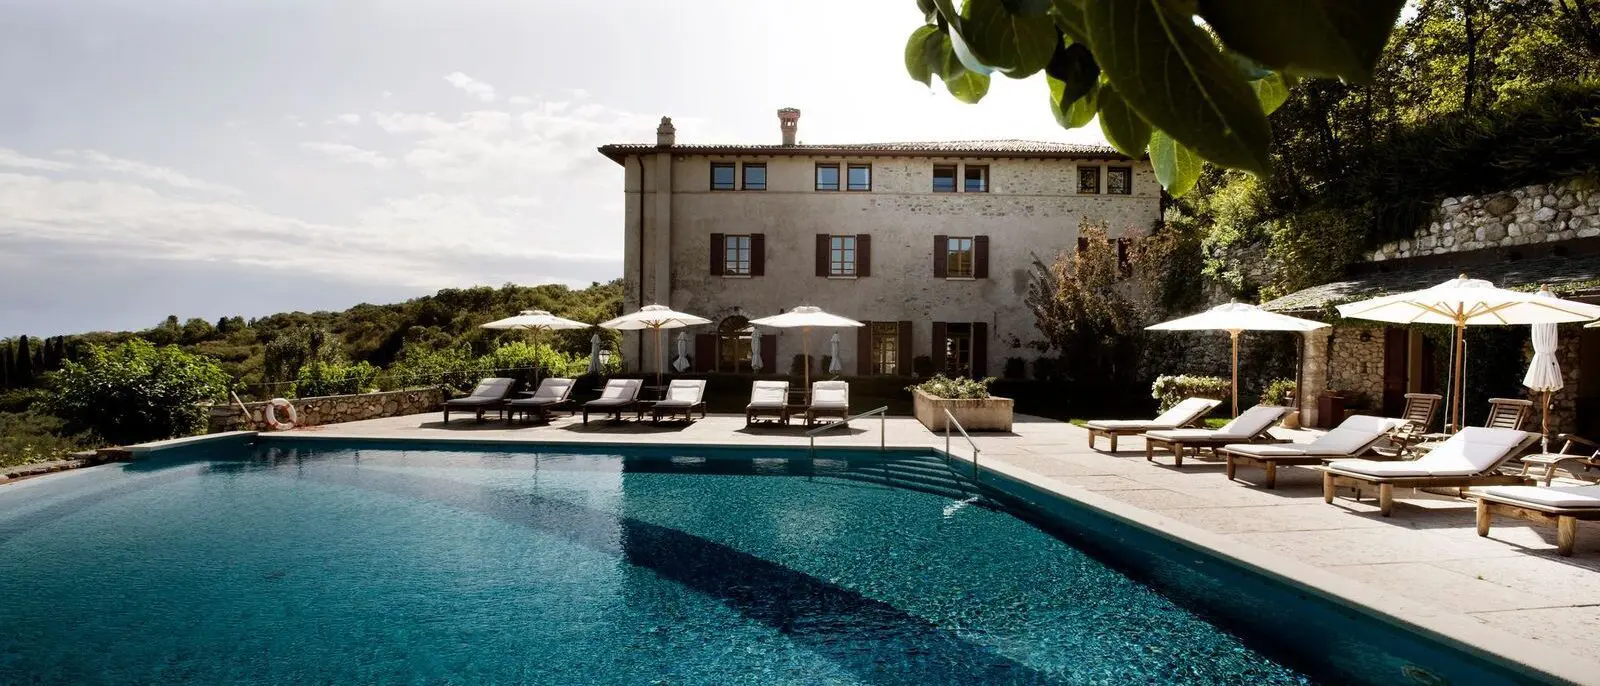 Nest Italy: Resort with View of Lake Garda